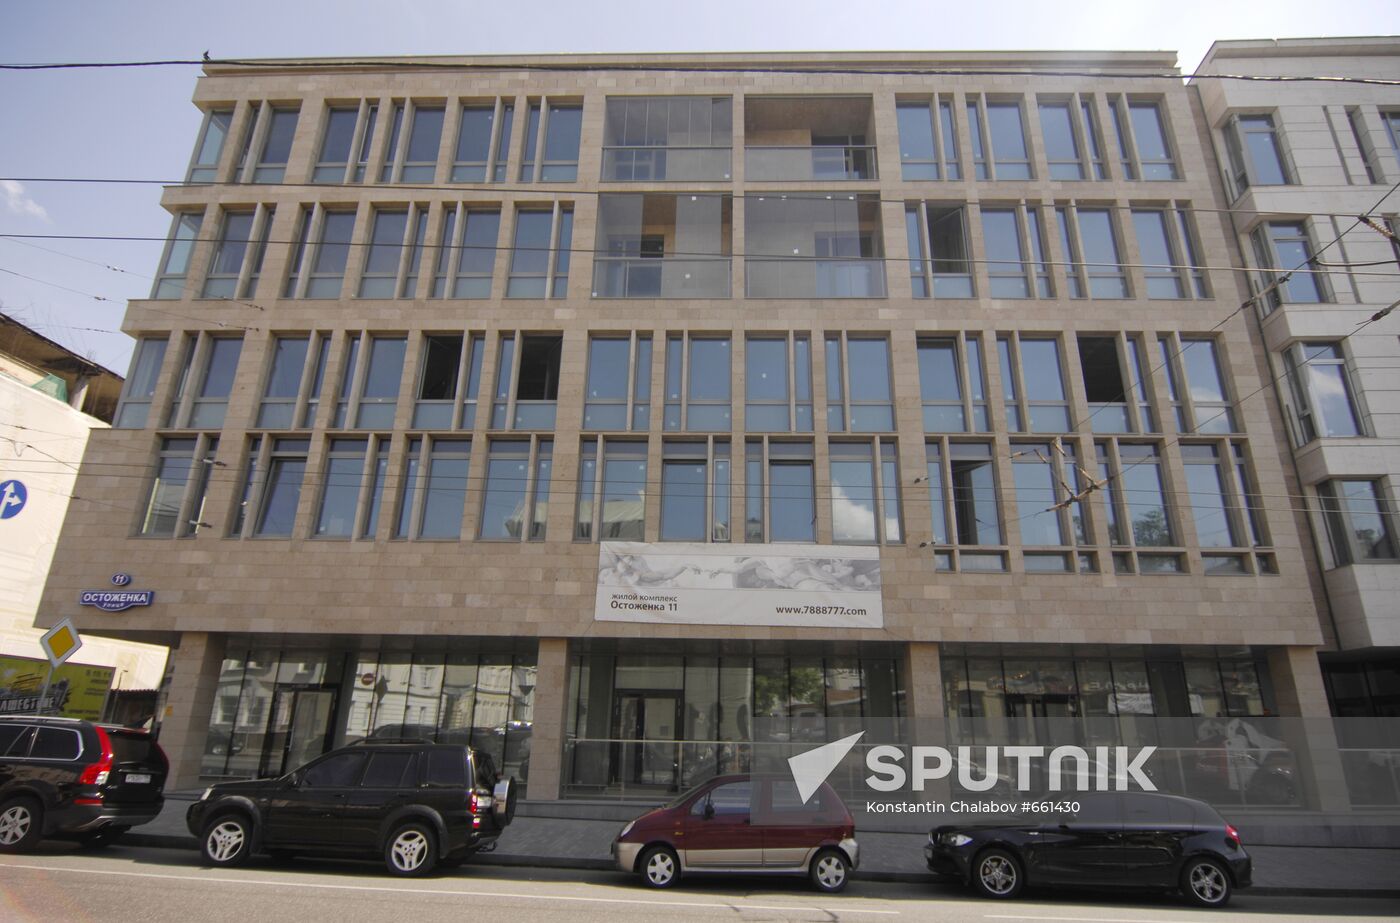 A building located at 11 Ostozhenka Street